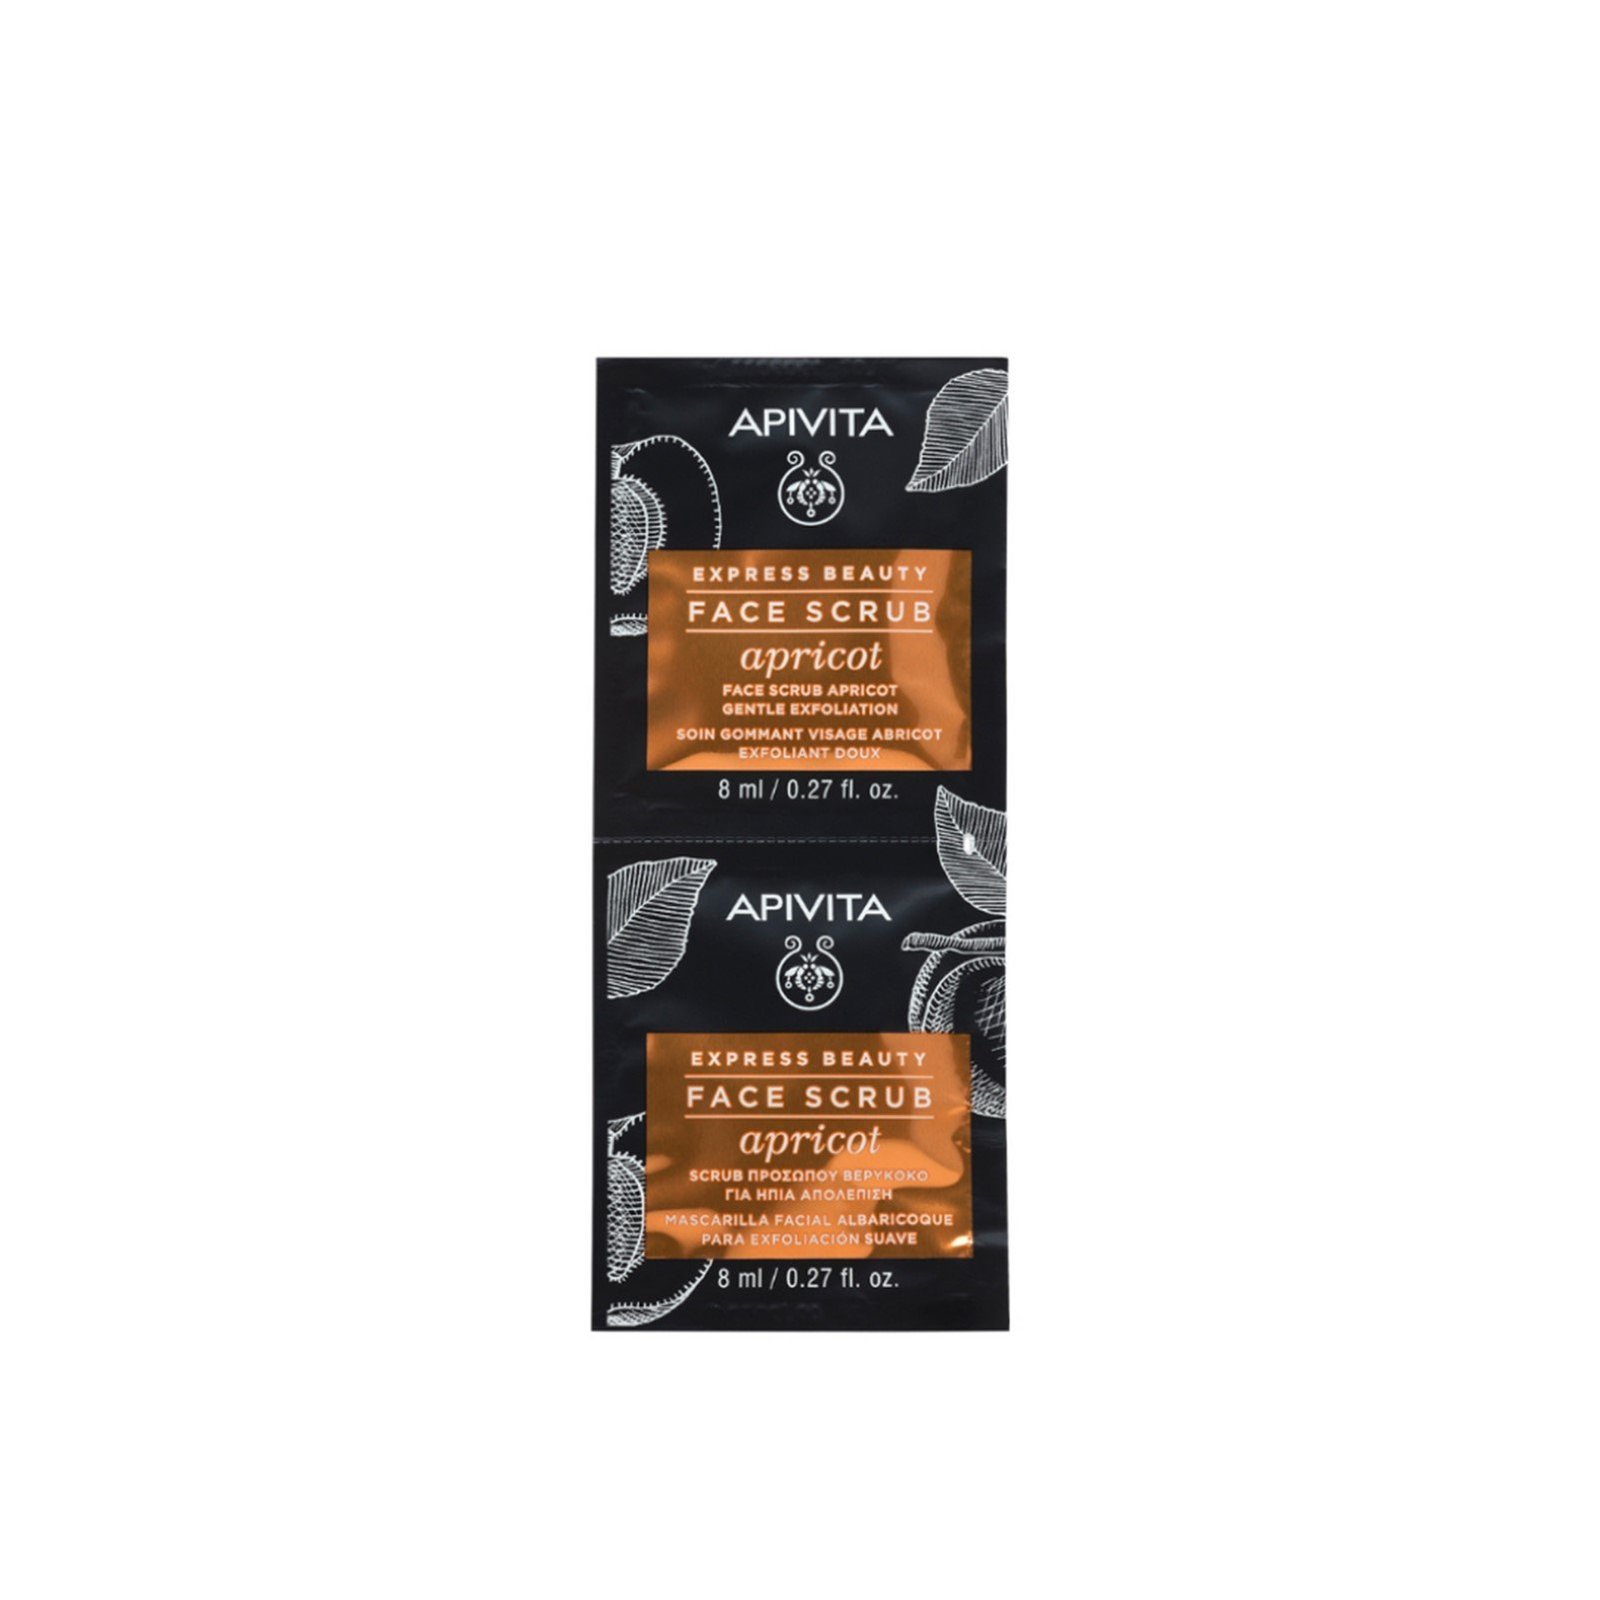 APIVITA Express Beauty Face Scrub Apricot 2x8ml (2x0.27fl oz)